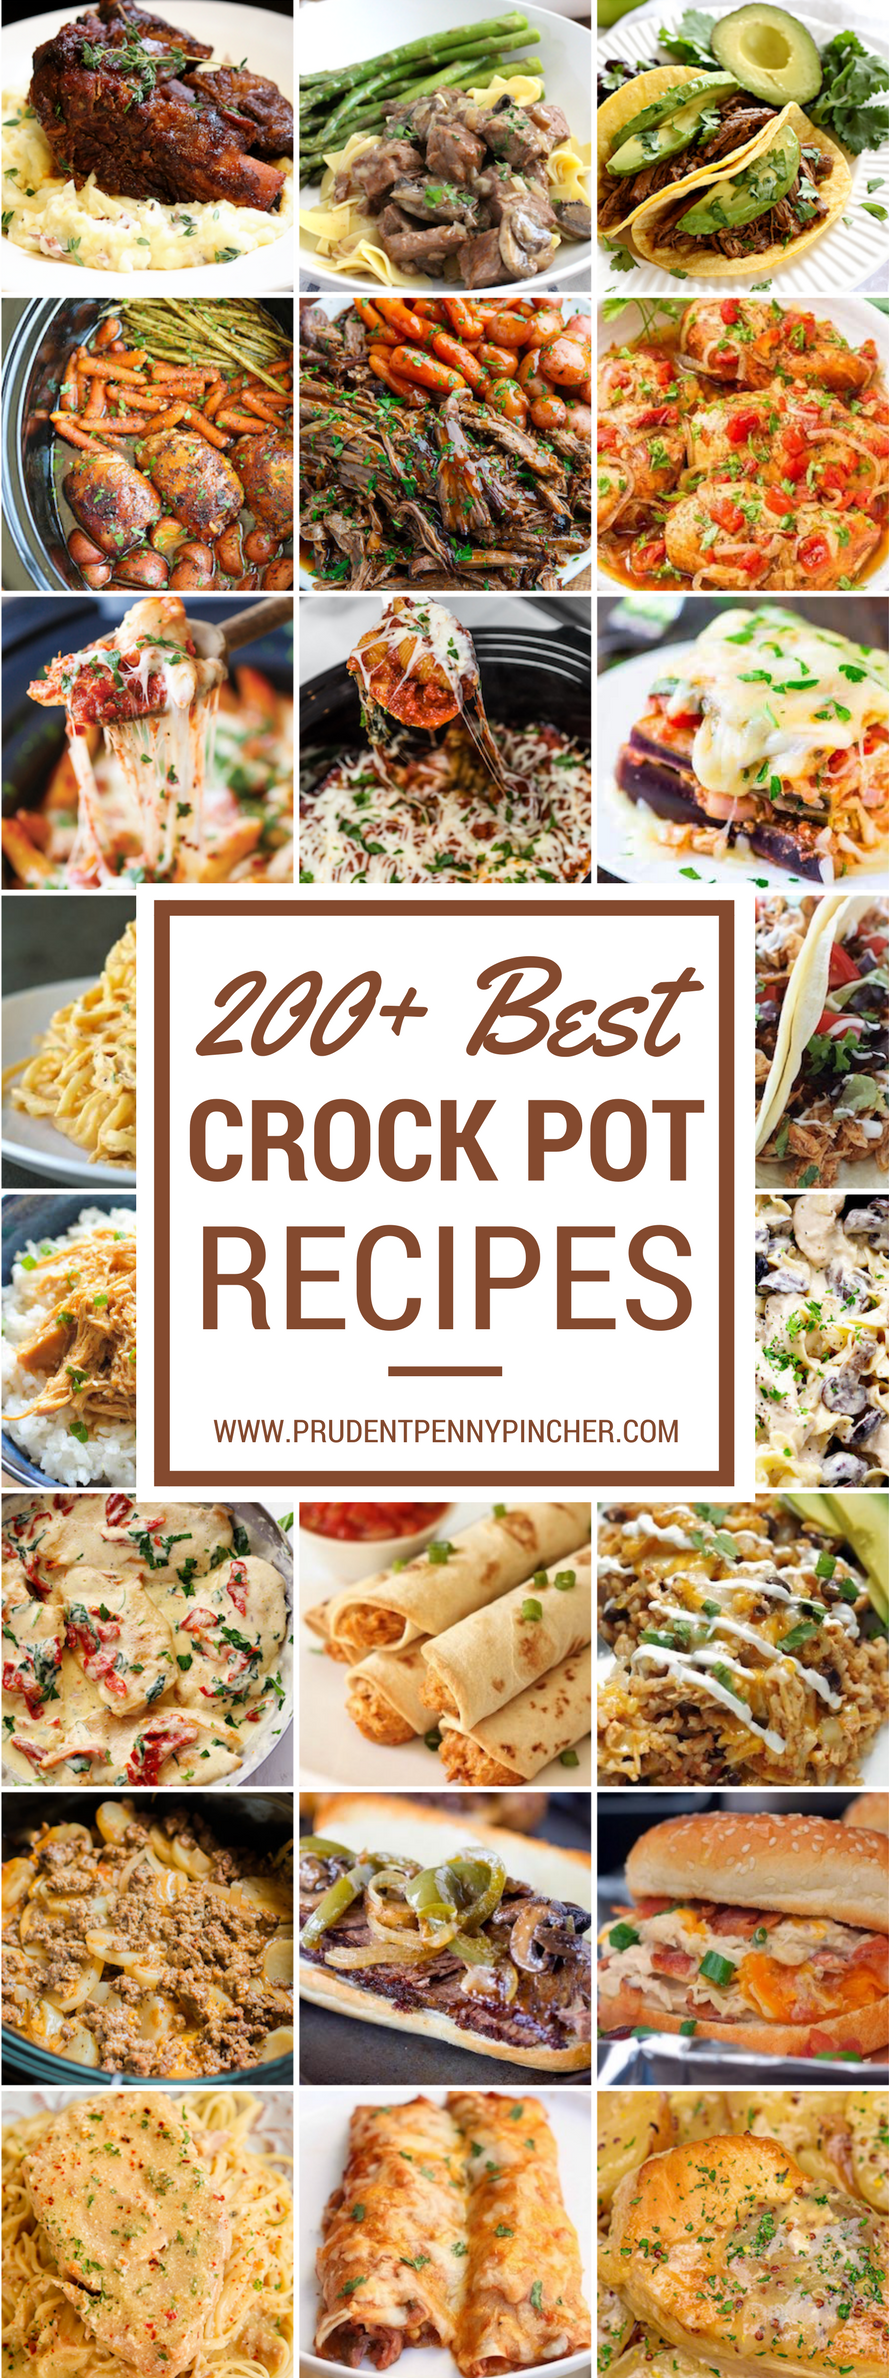 200 Best Crock Pot Recipes - Prudent Penny Pincher